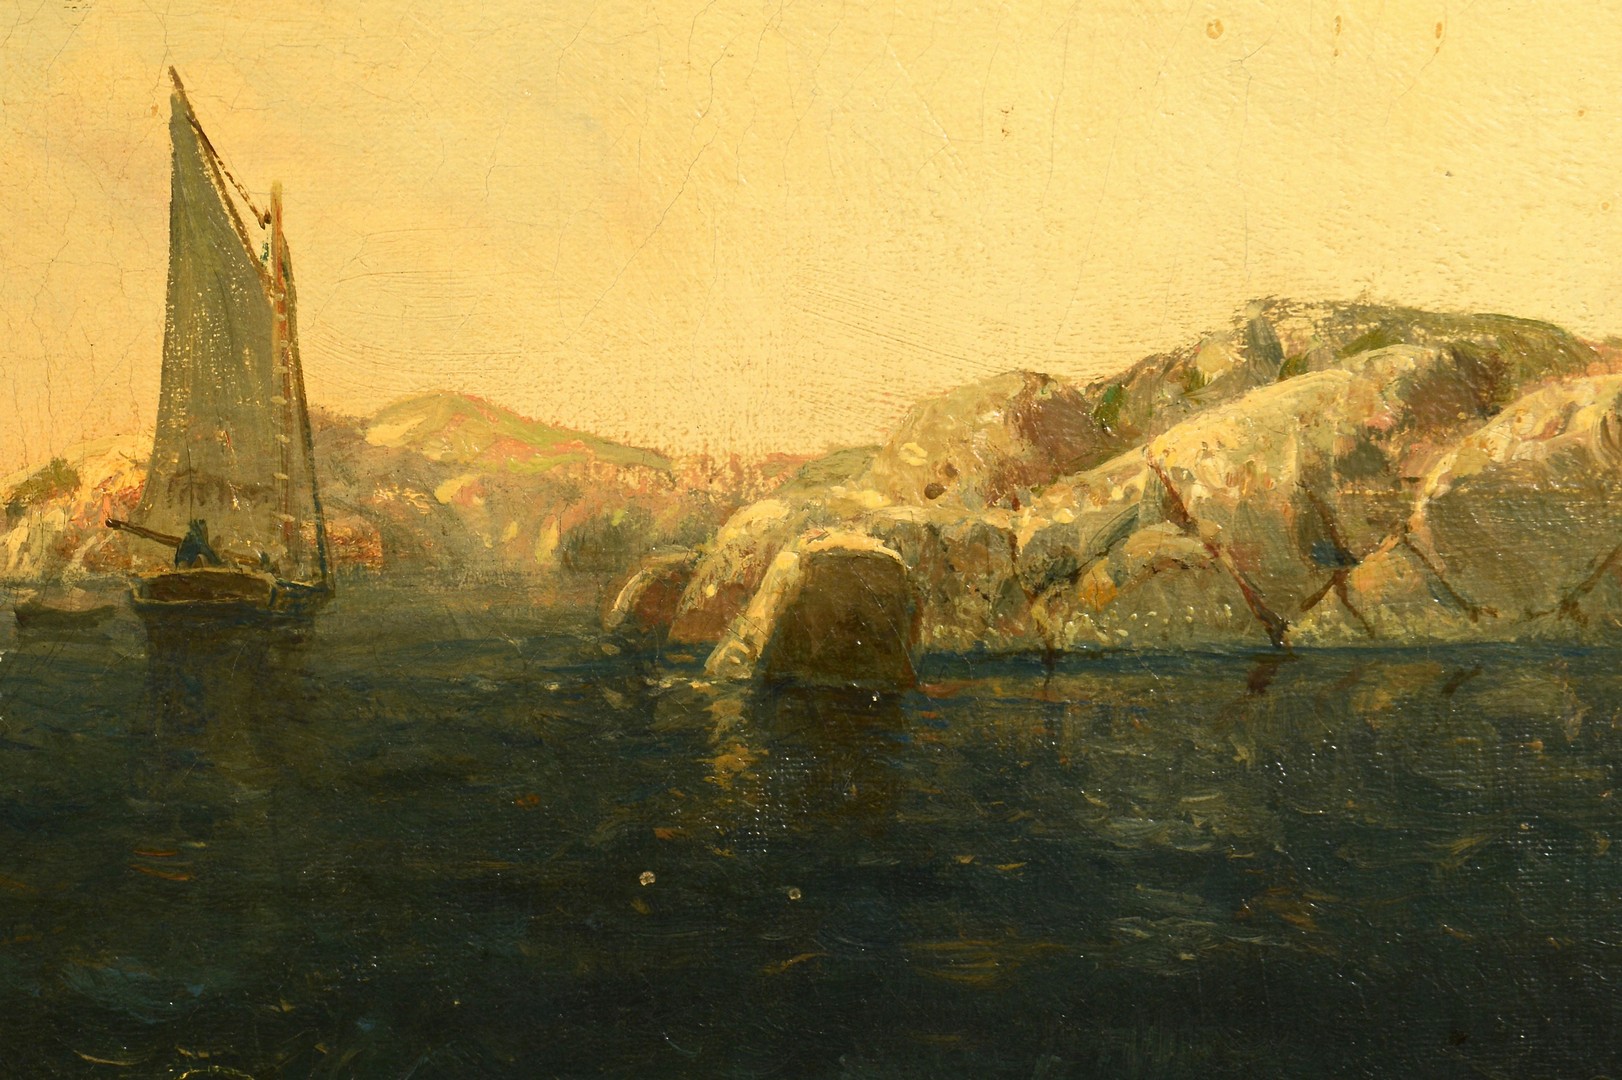 Lot 194: Arthur Quartley Oil on Canvas, A Summer Afternoon